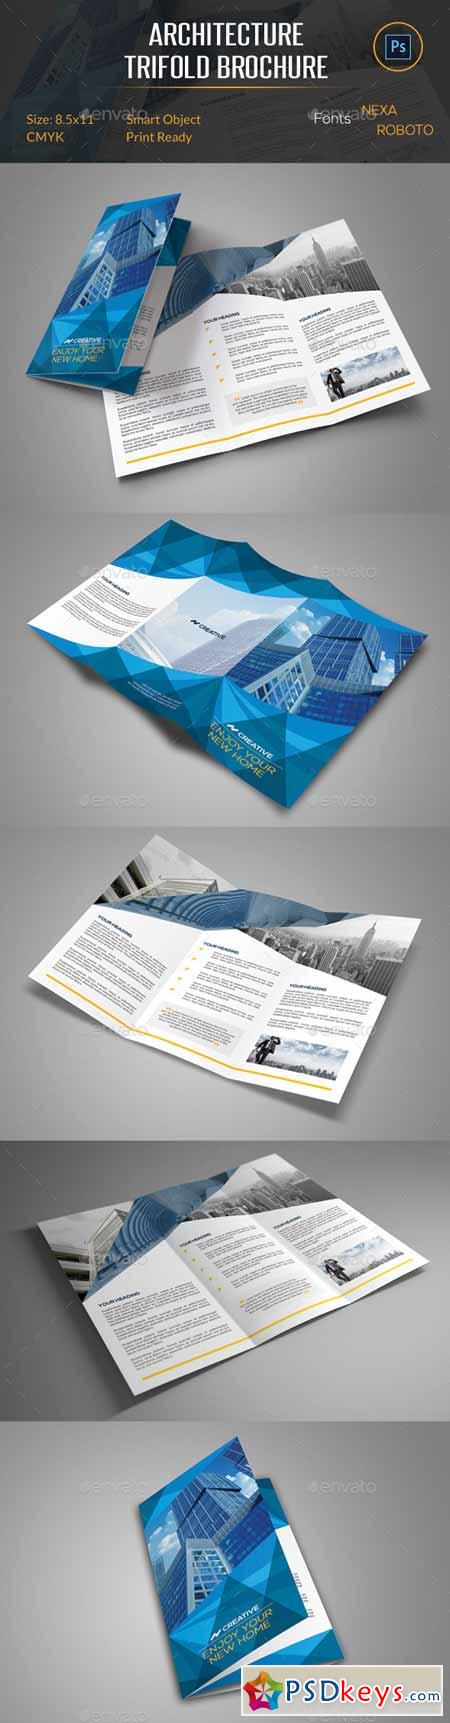 Architecture Trifold Brochure 10949546